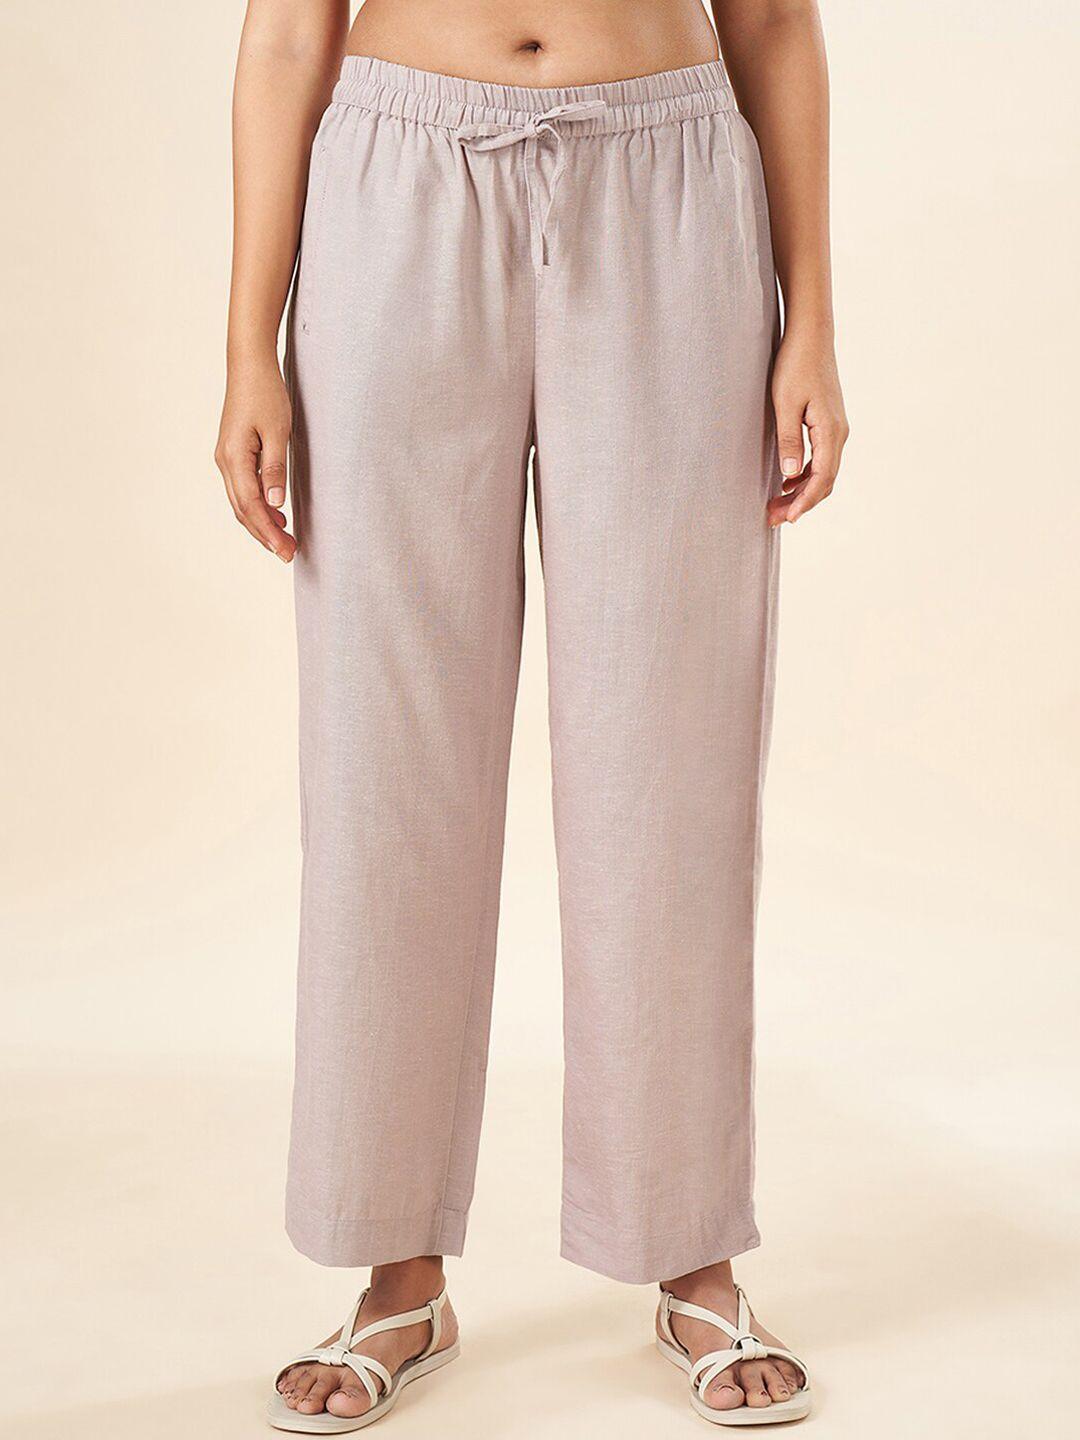 akkriti by pantaloons women trousers